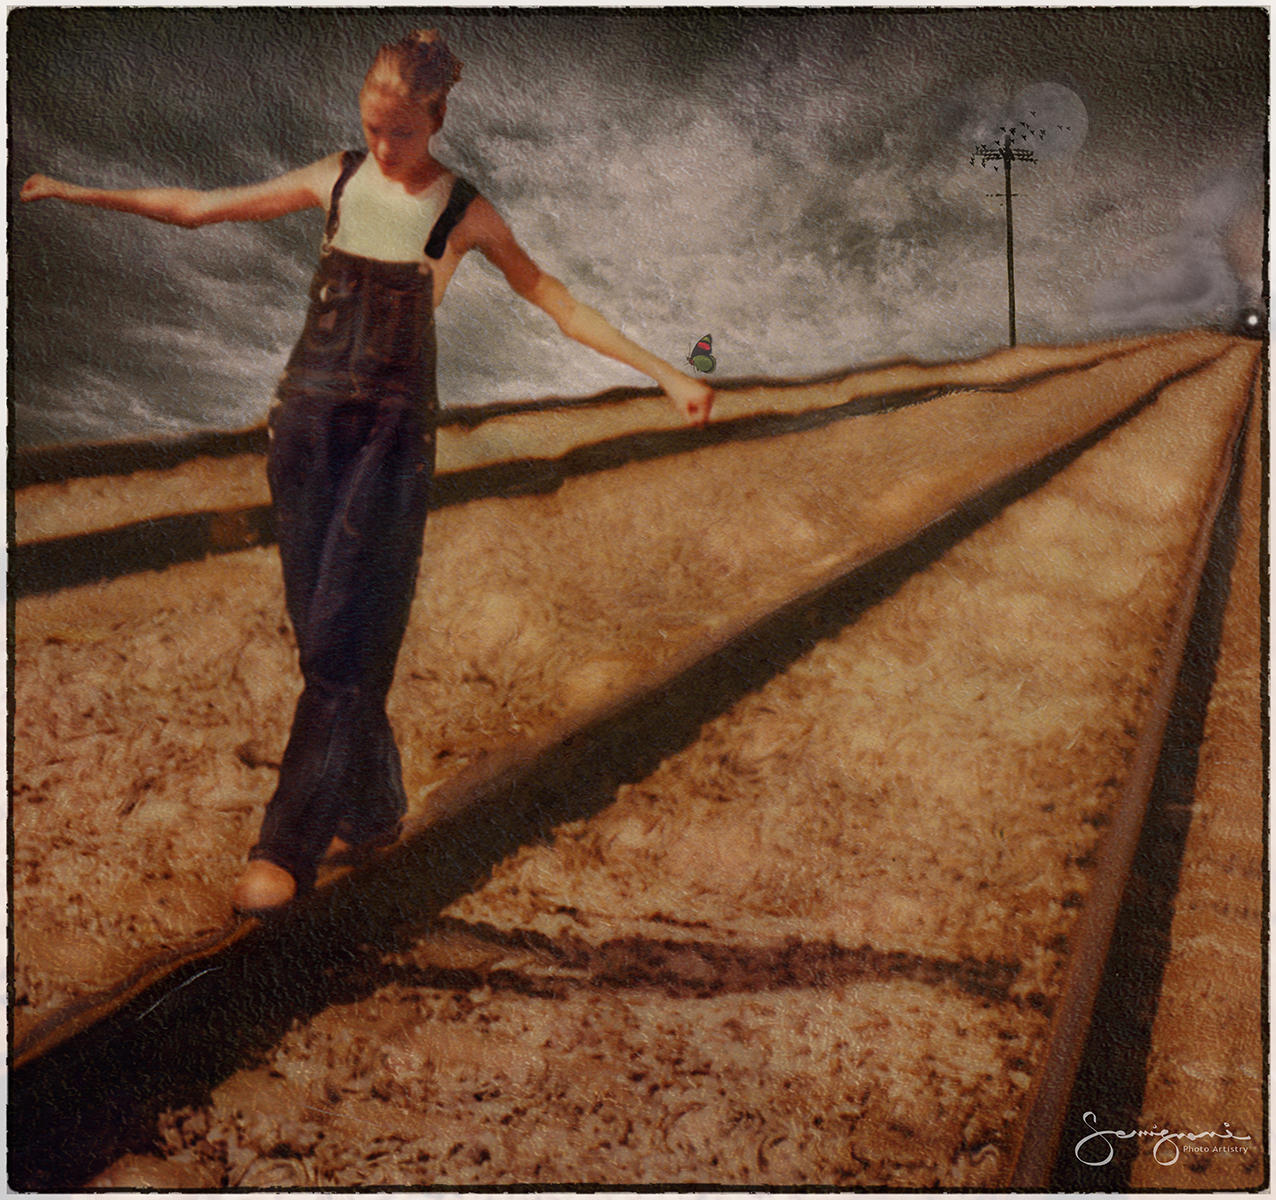 Katie on the Railroad Tracks-
Ft Lauderdale, FL